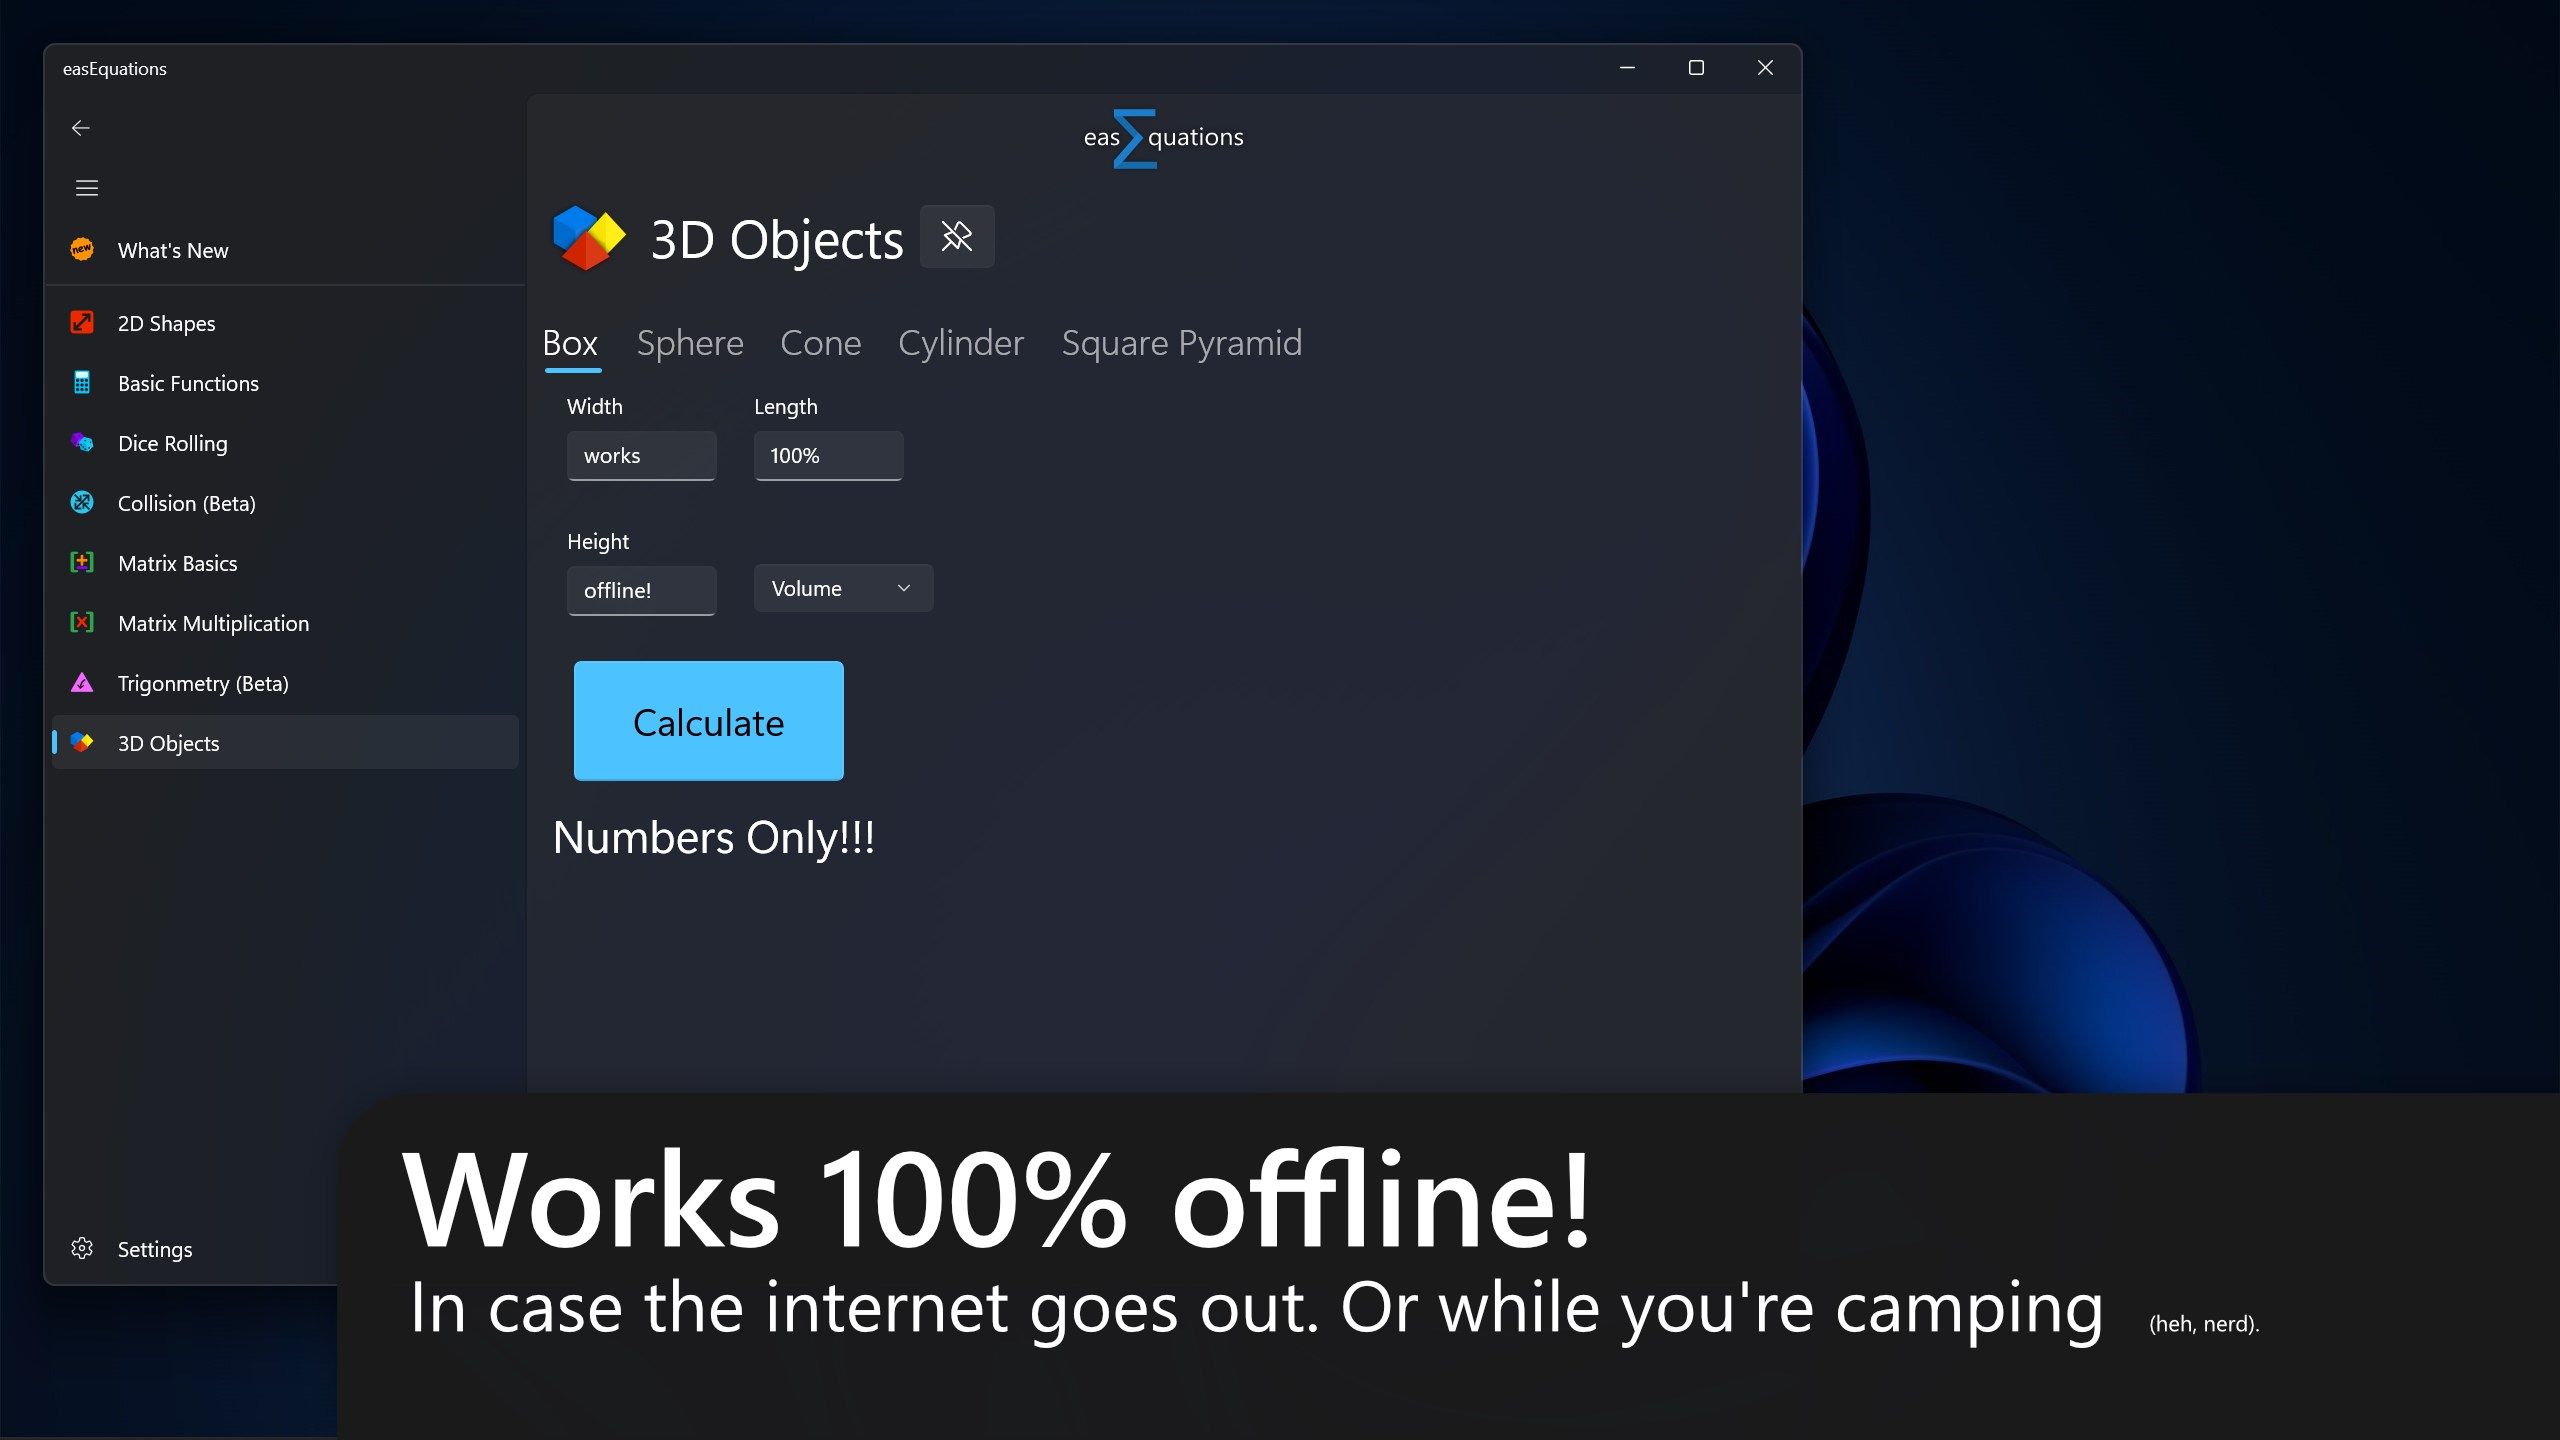 Works 100% offline!